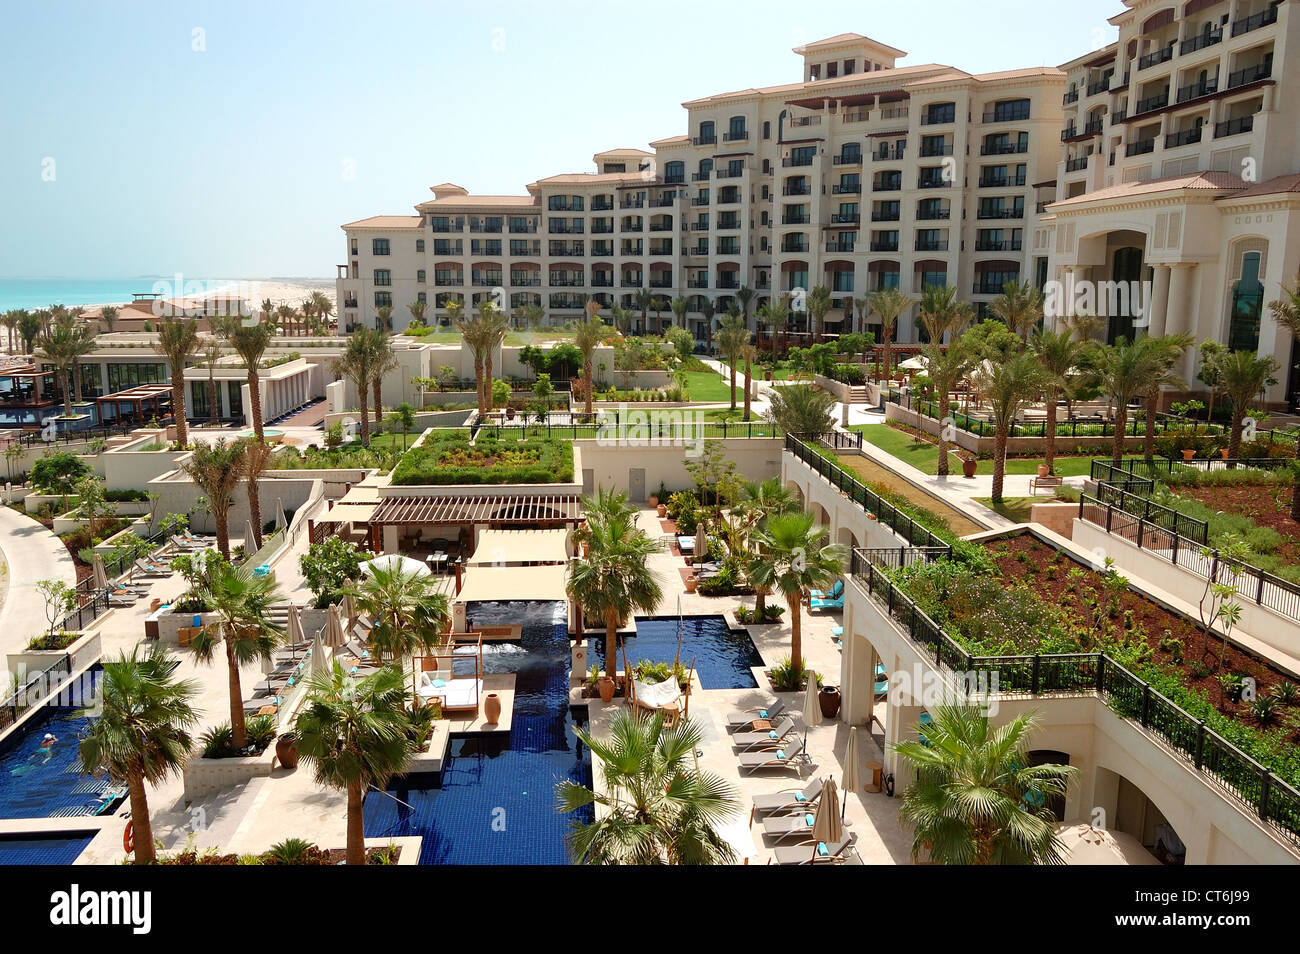 Swimming pools at the luxury hotel, Saadiyat island, Abu Dhabi, UAE Stock Photo